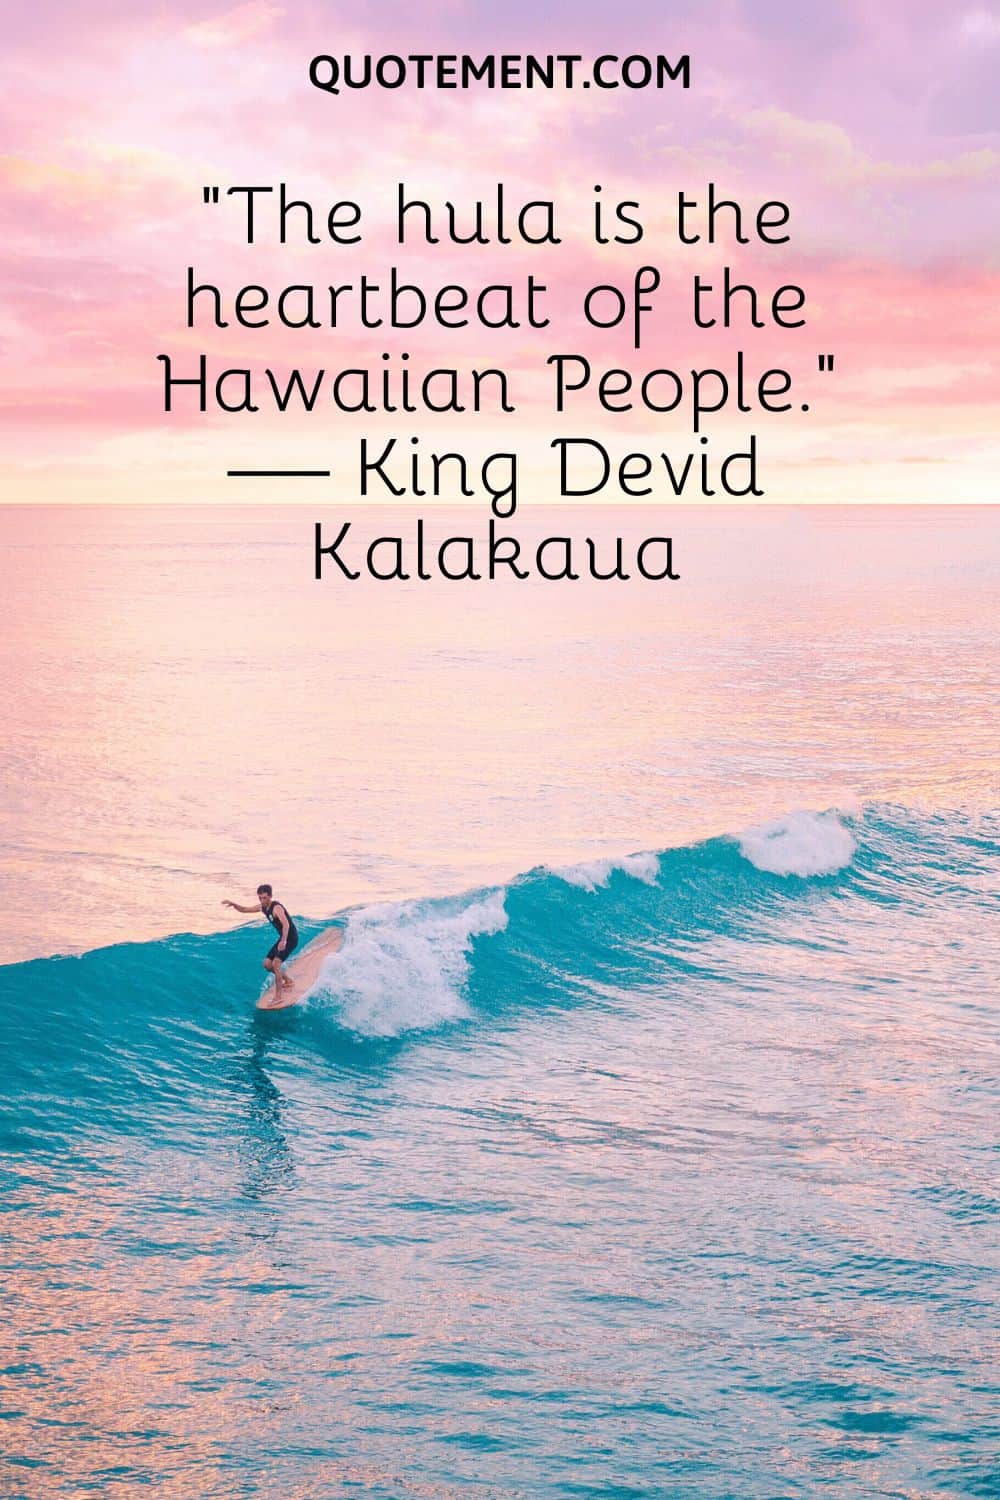 The hula is the heartbeat of the Hawaiian People